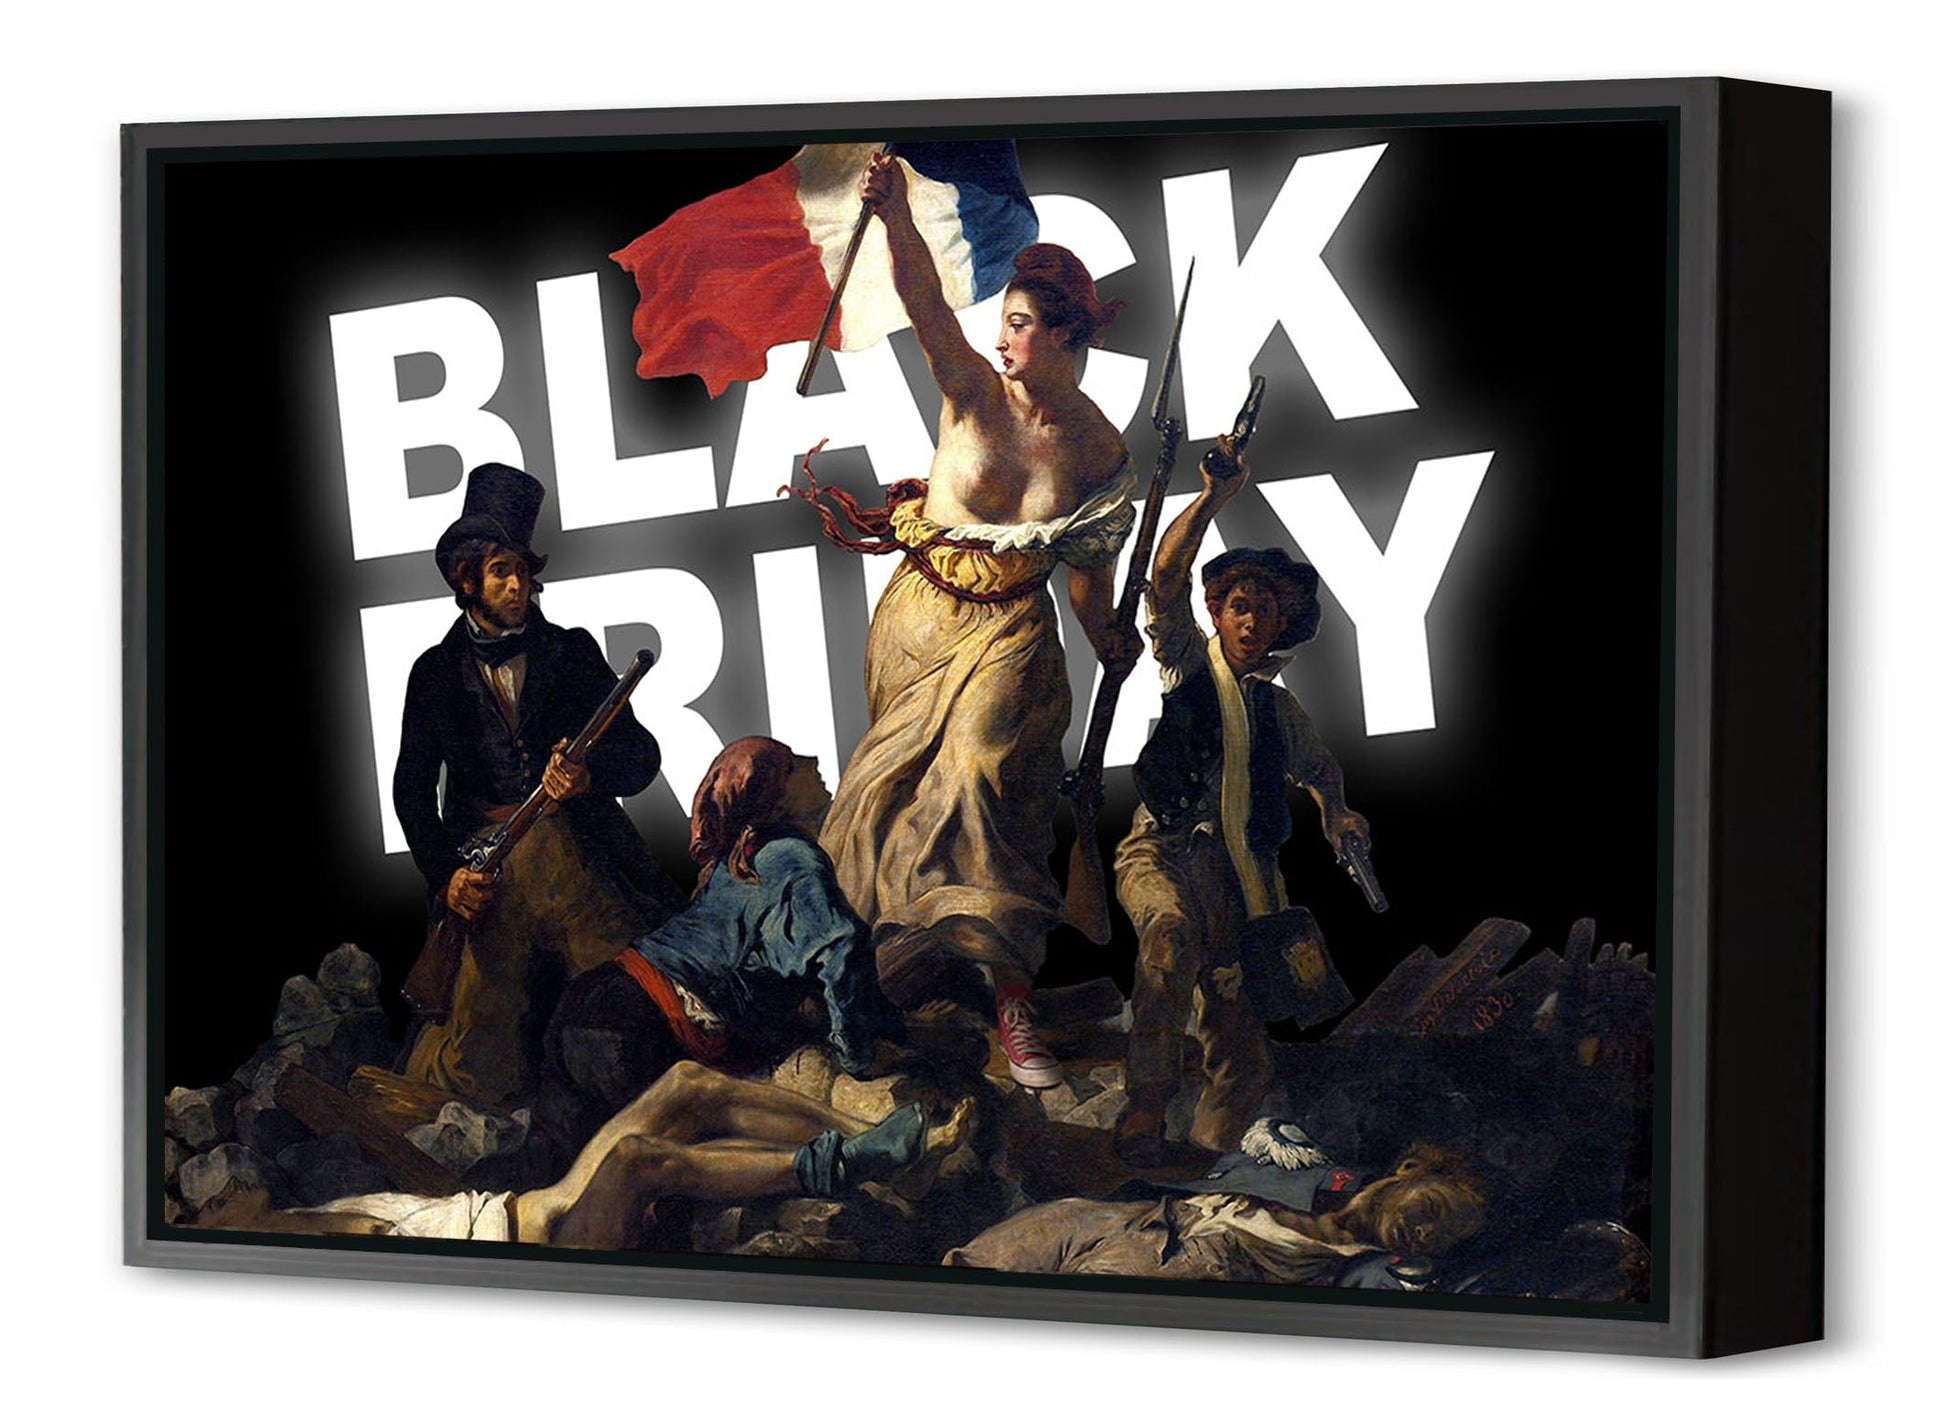 Black Revolution-delacroix, print-Canvas Print with Box Frame-40 x 60 cm-BLUE SHAKER